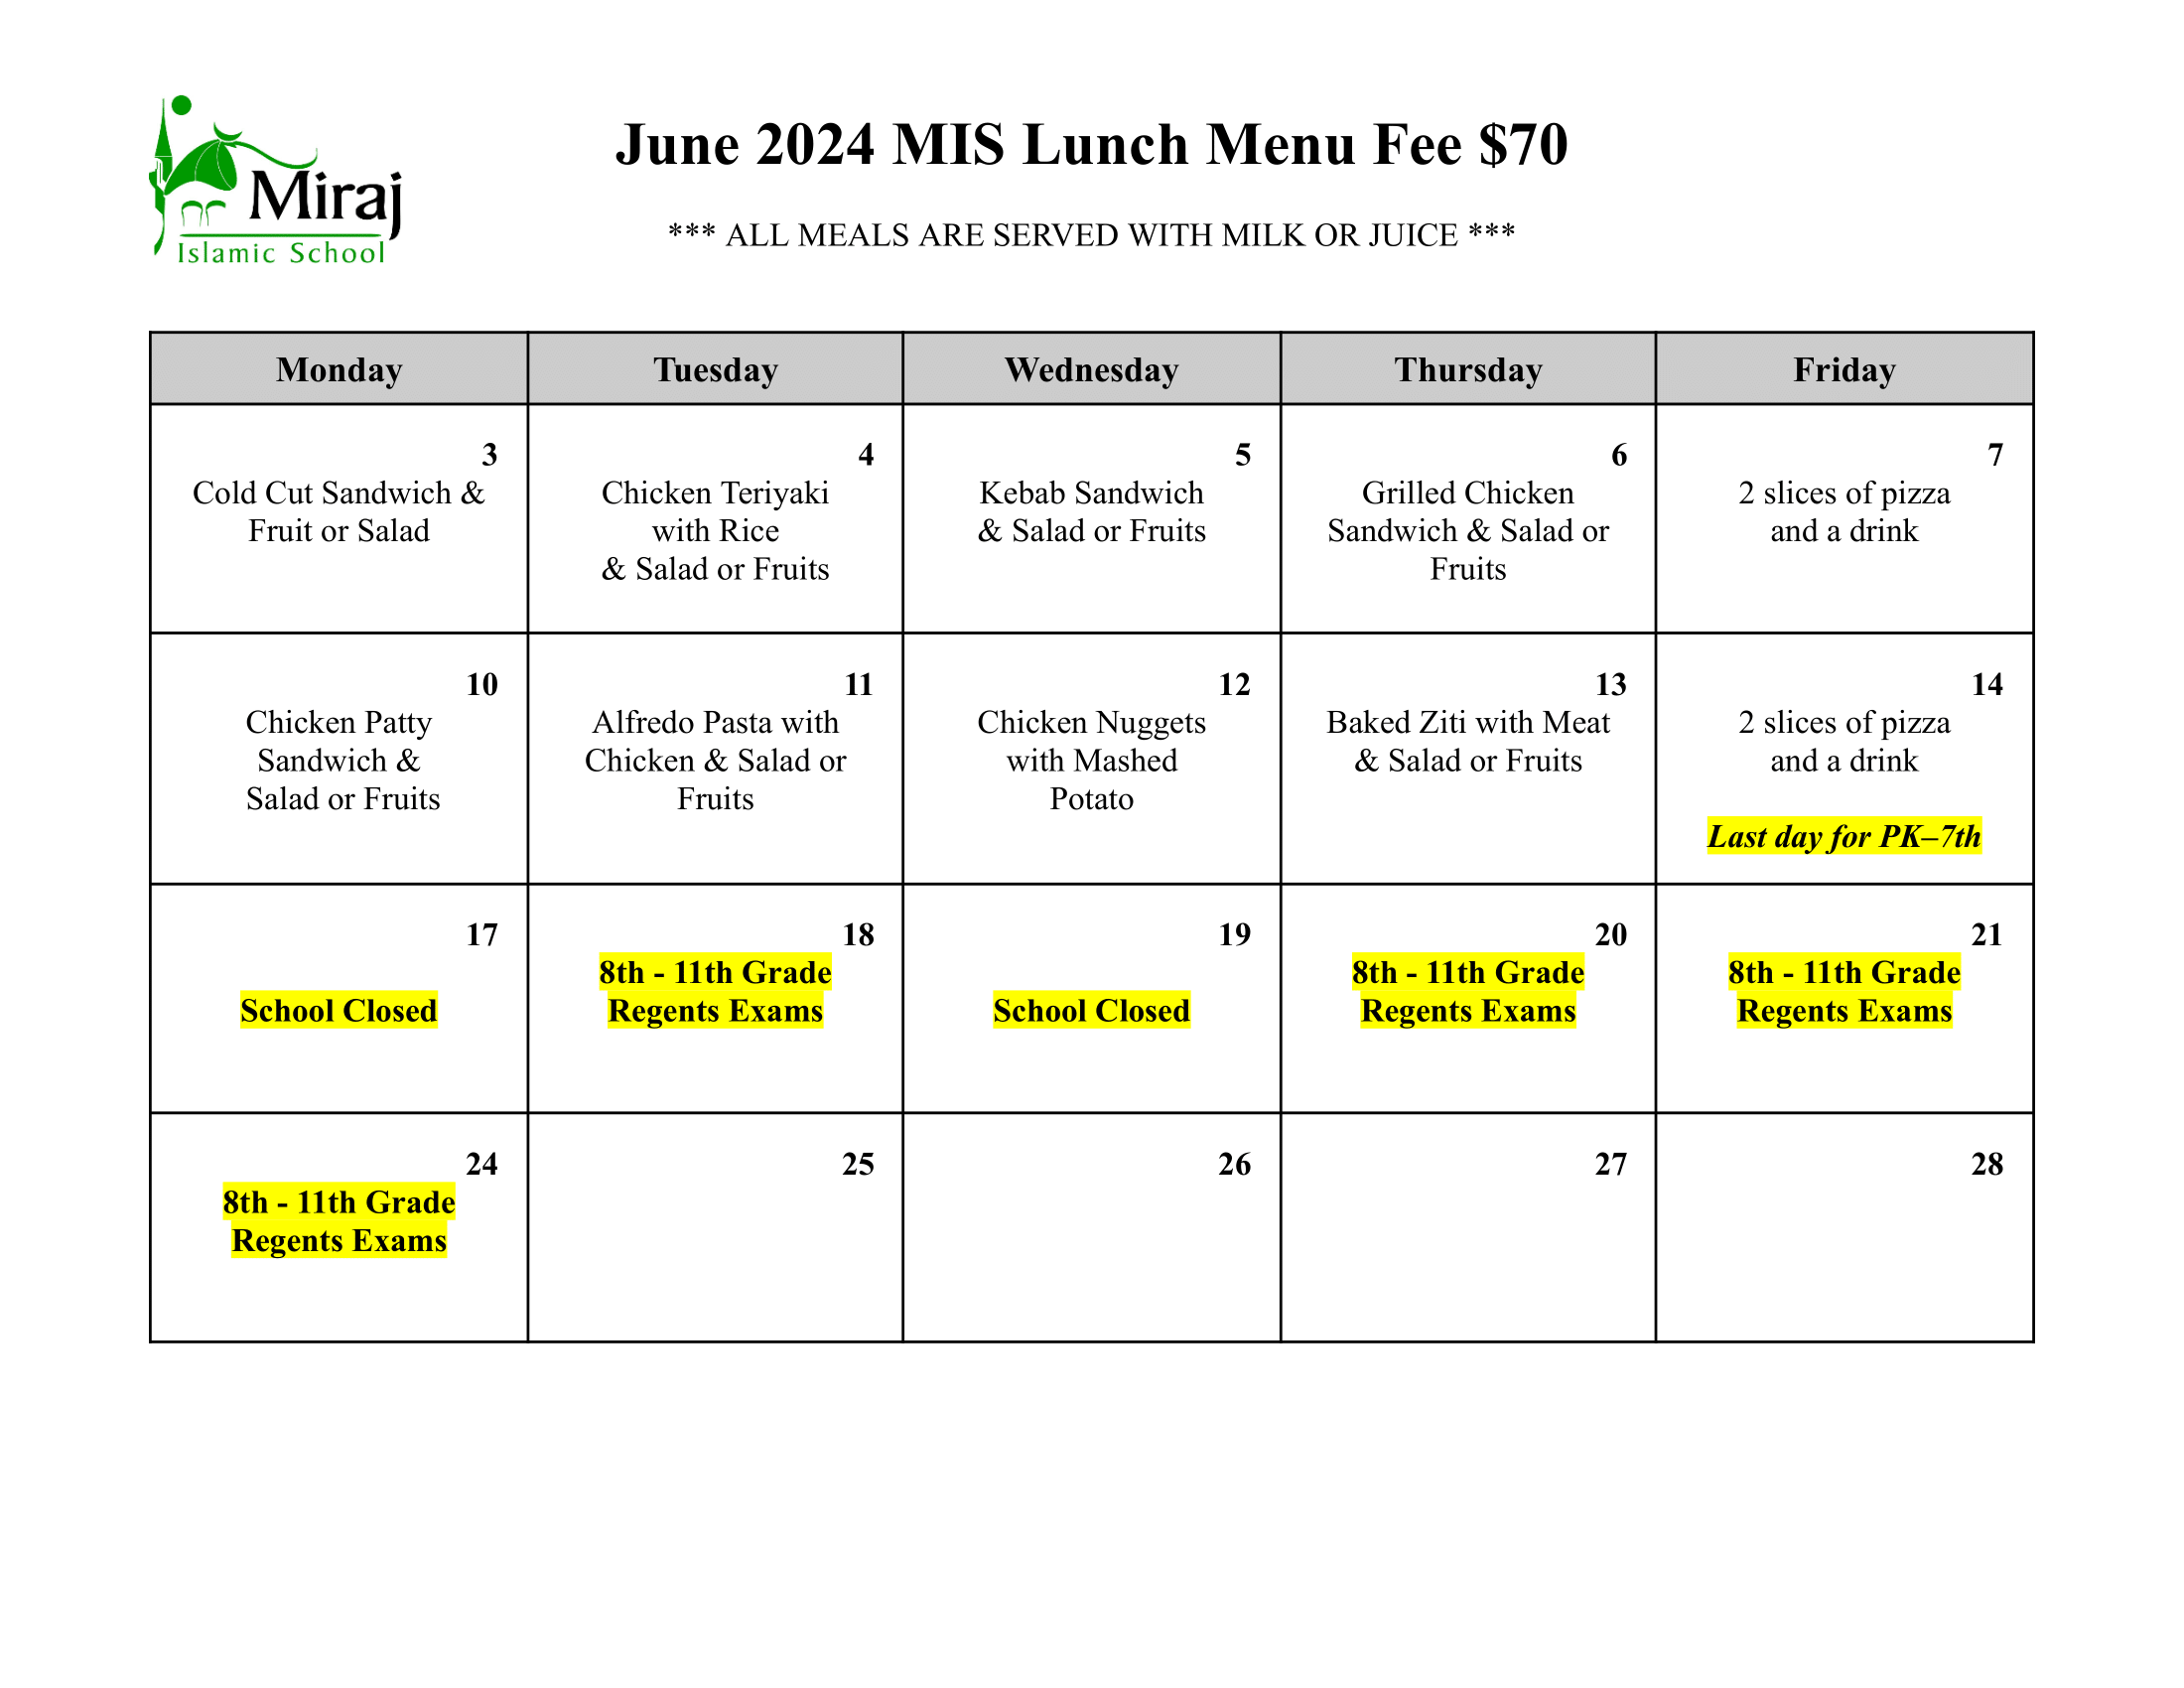 June 2024 Lunch Menu